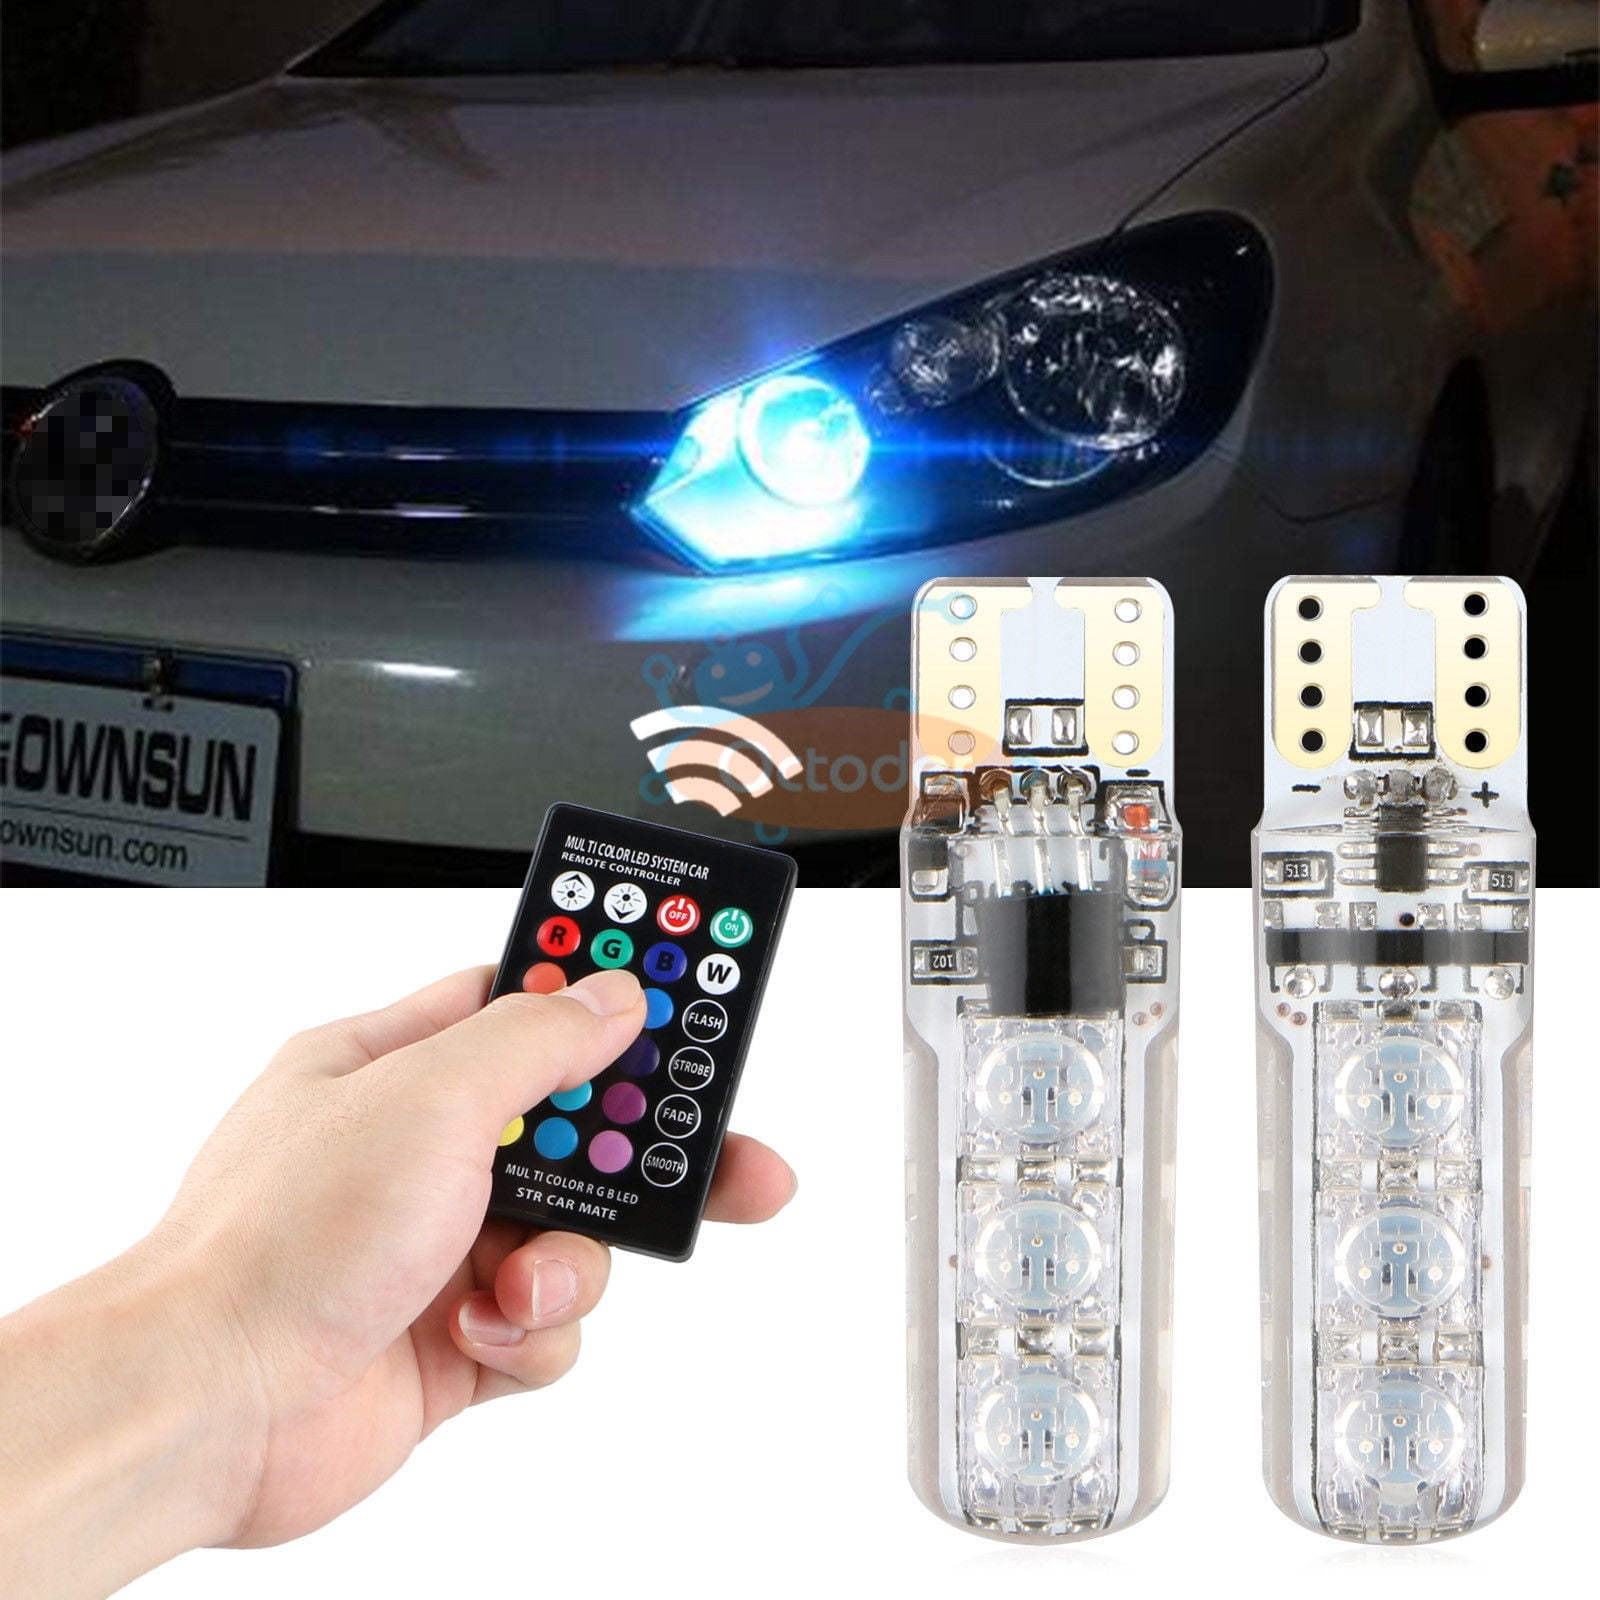 CUHAWUDBA 2PCS T10 W5W 5050 6SMD RGB LED Multi Color Light Car Wedge Bulbs Remote Control